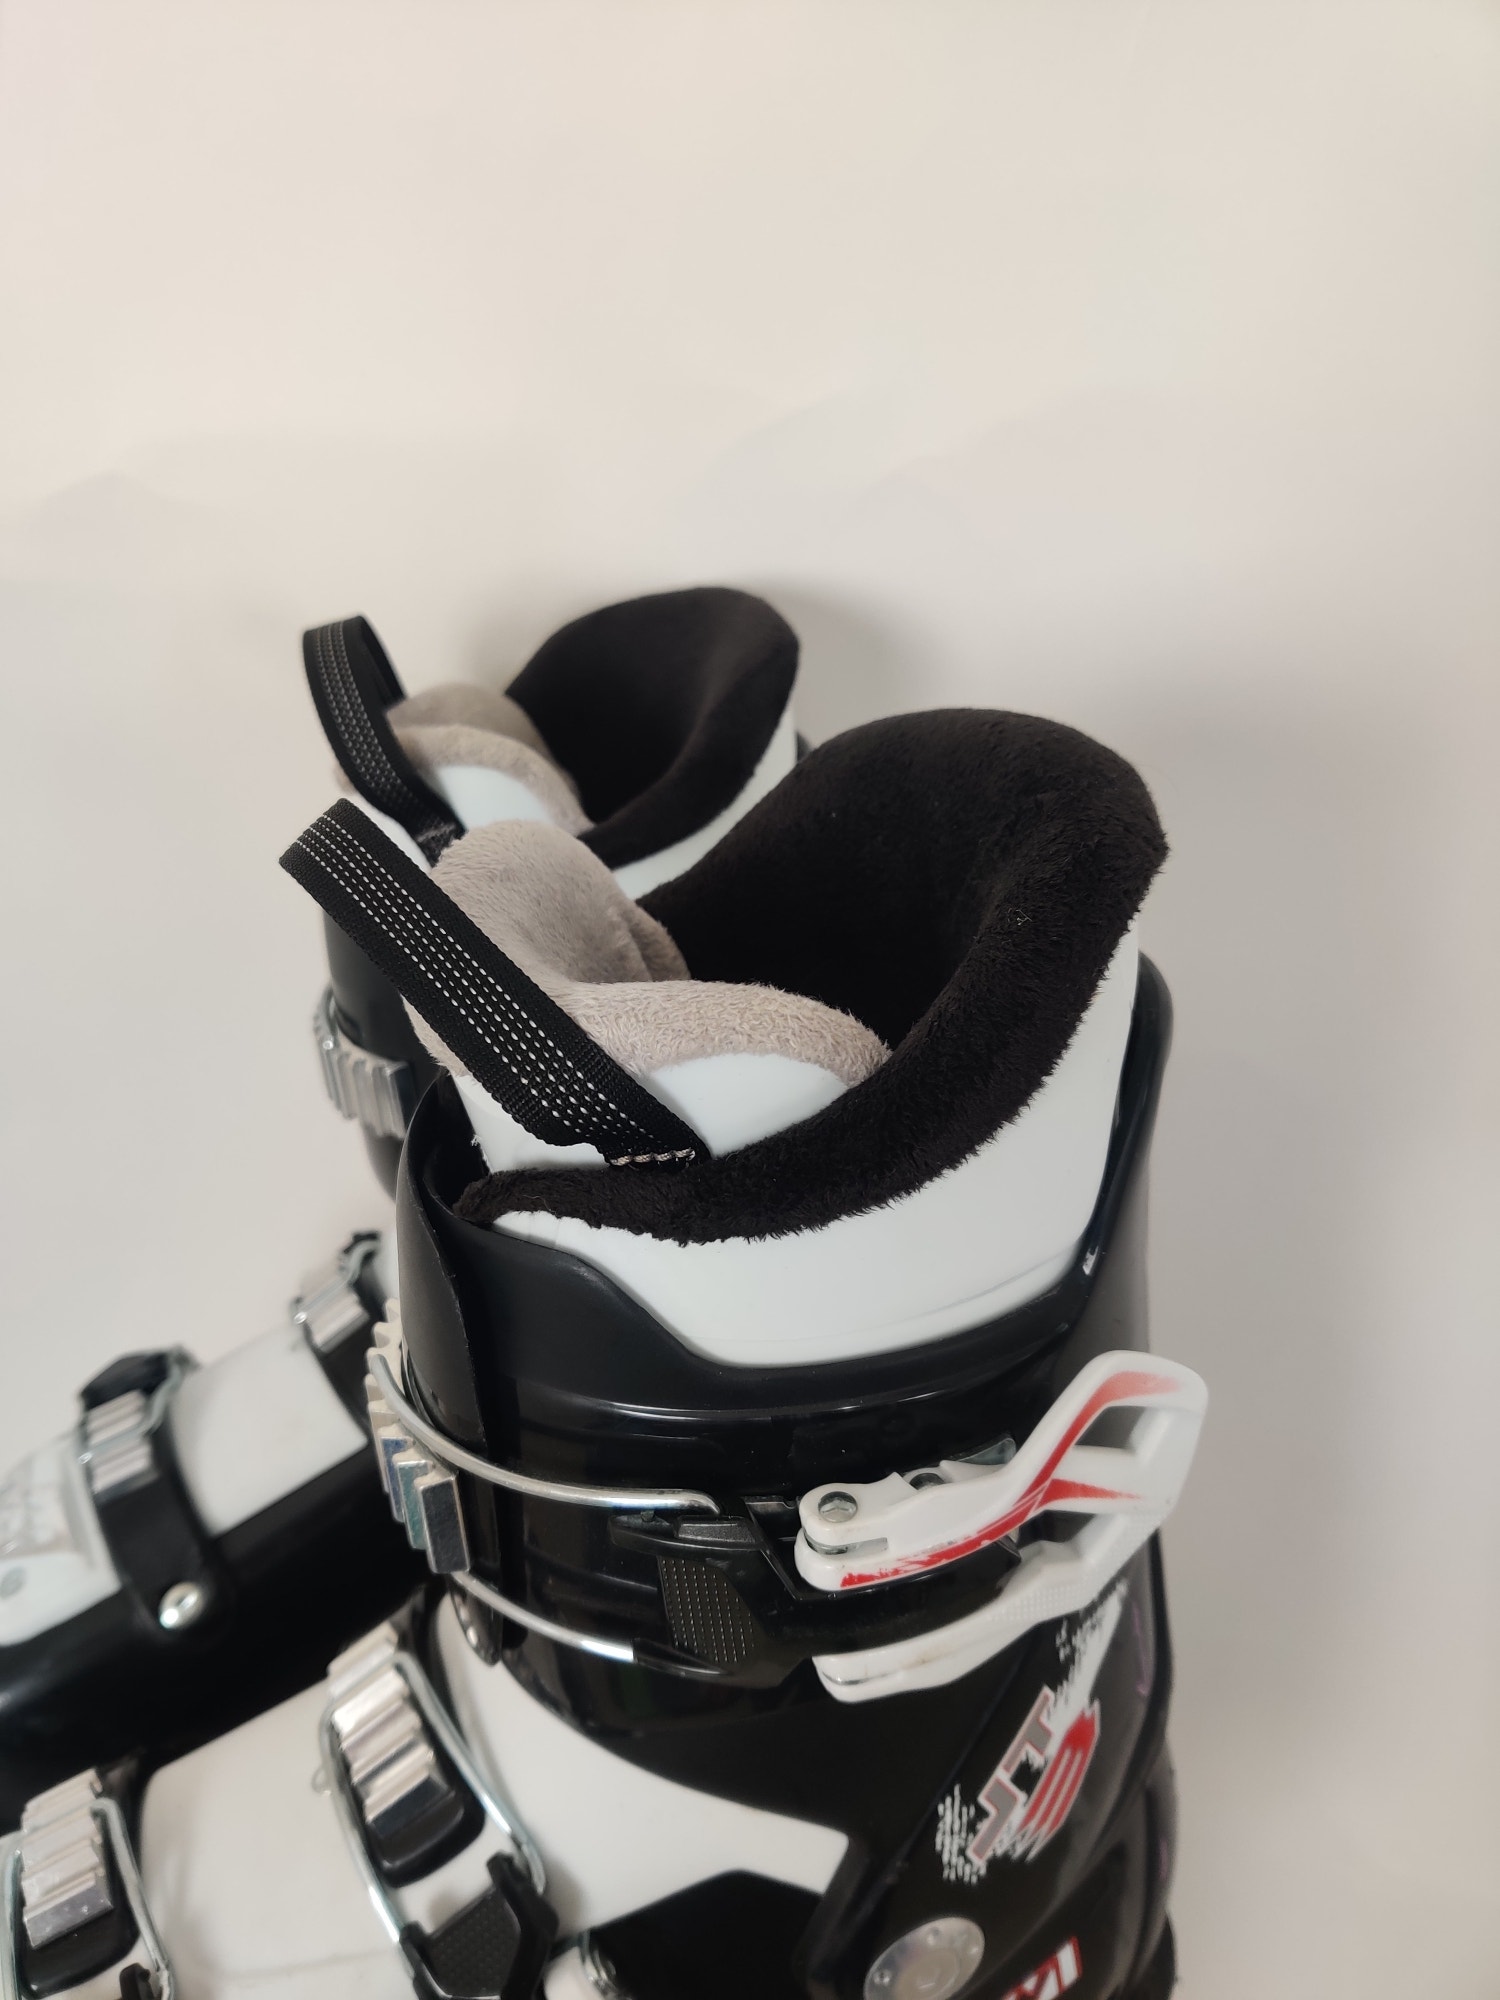 Tecnica JT 3 Jr 25.5-26.5 Mondo Kids Snow Ski Boots 305 mm black/white - Picture 8 of 11